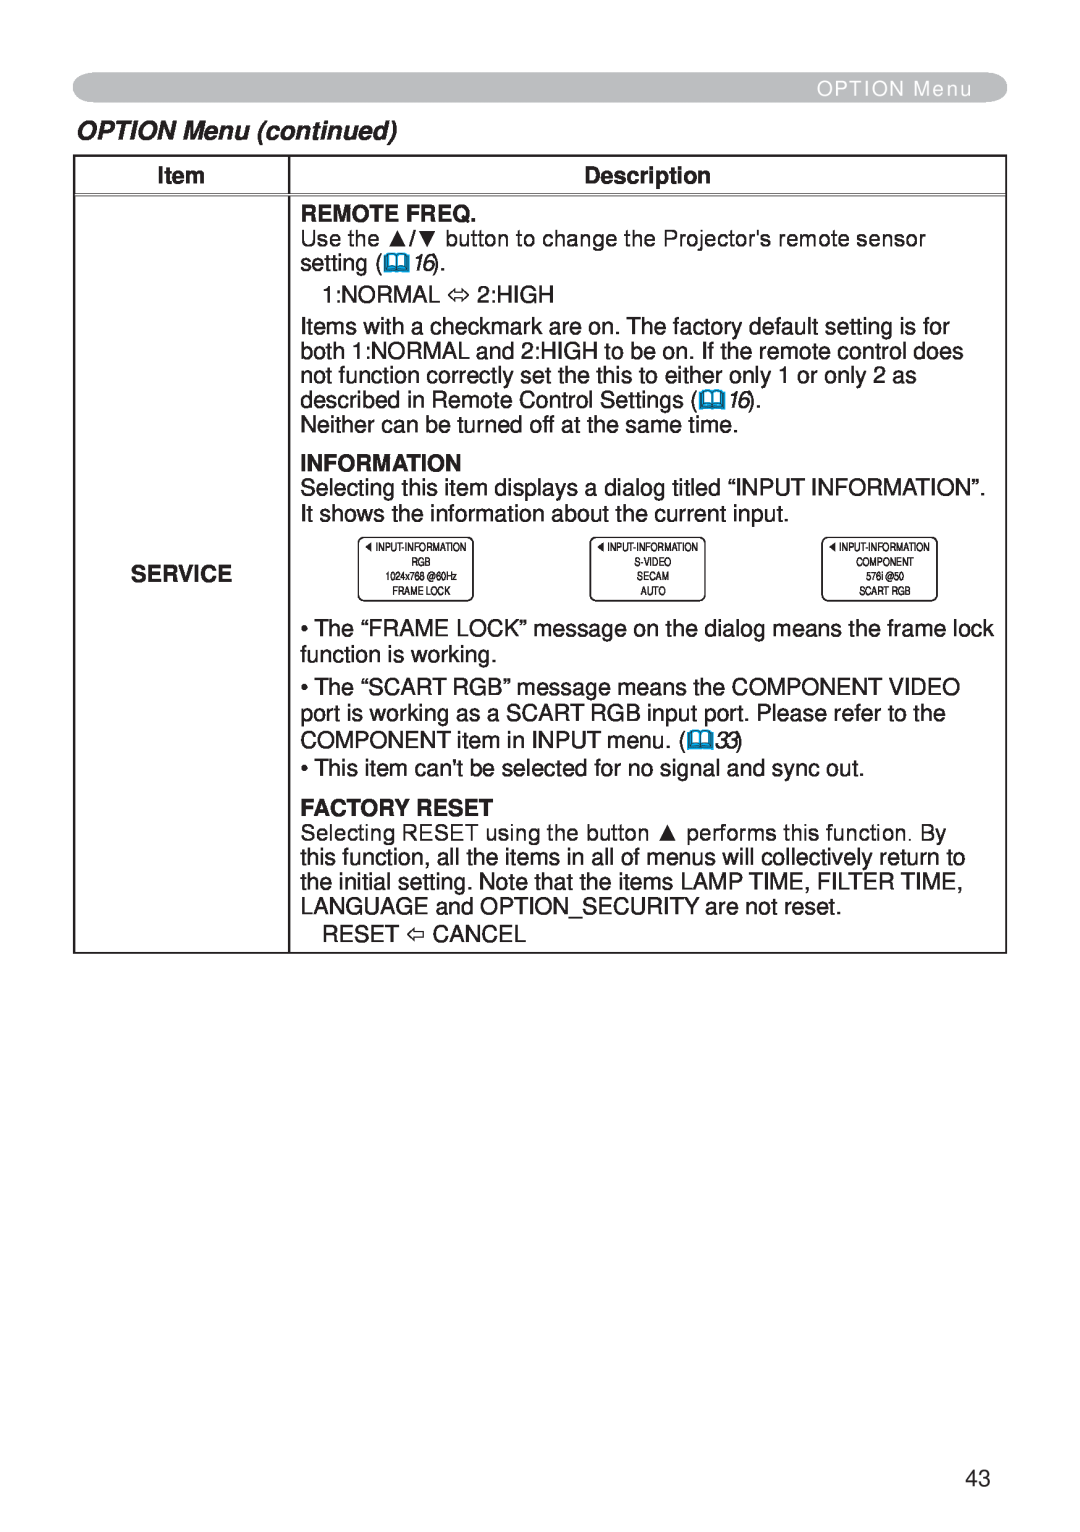 Hitachi CP-X265 user manual OPTION Menu continued, Description, Remote Freq, Information, Service, Factory Reset 